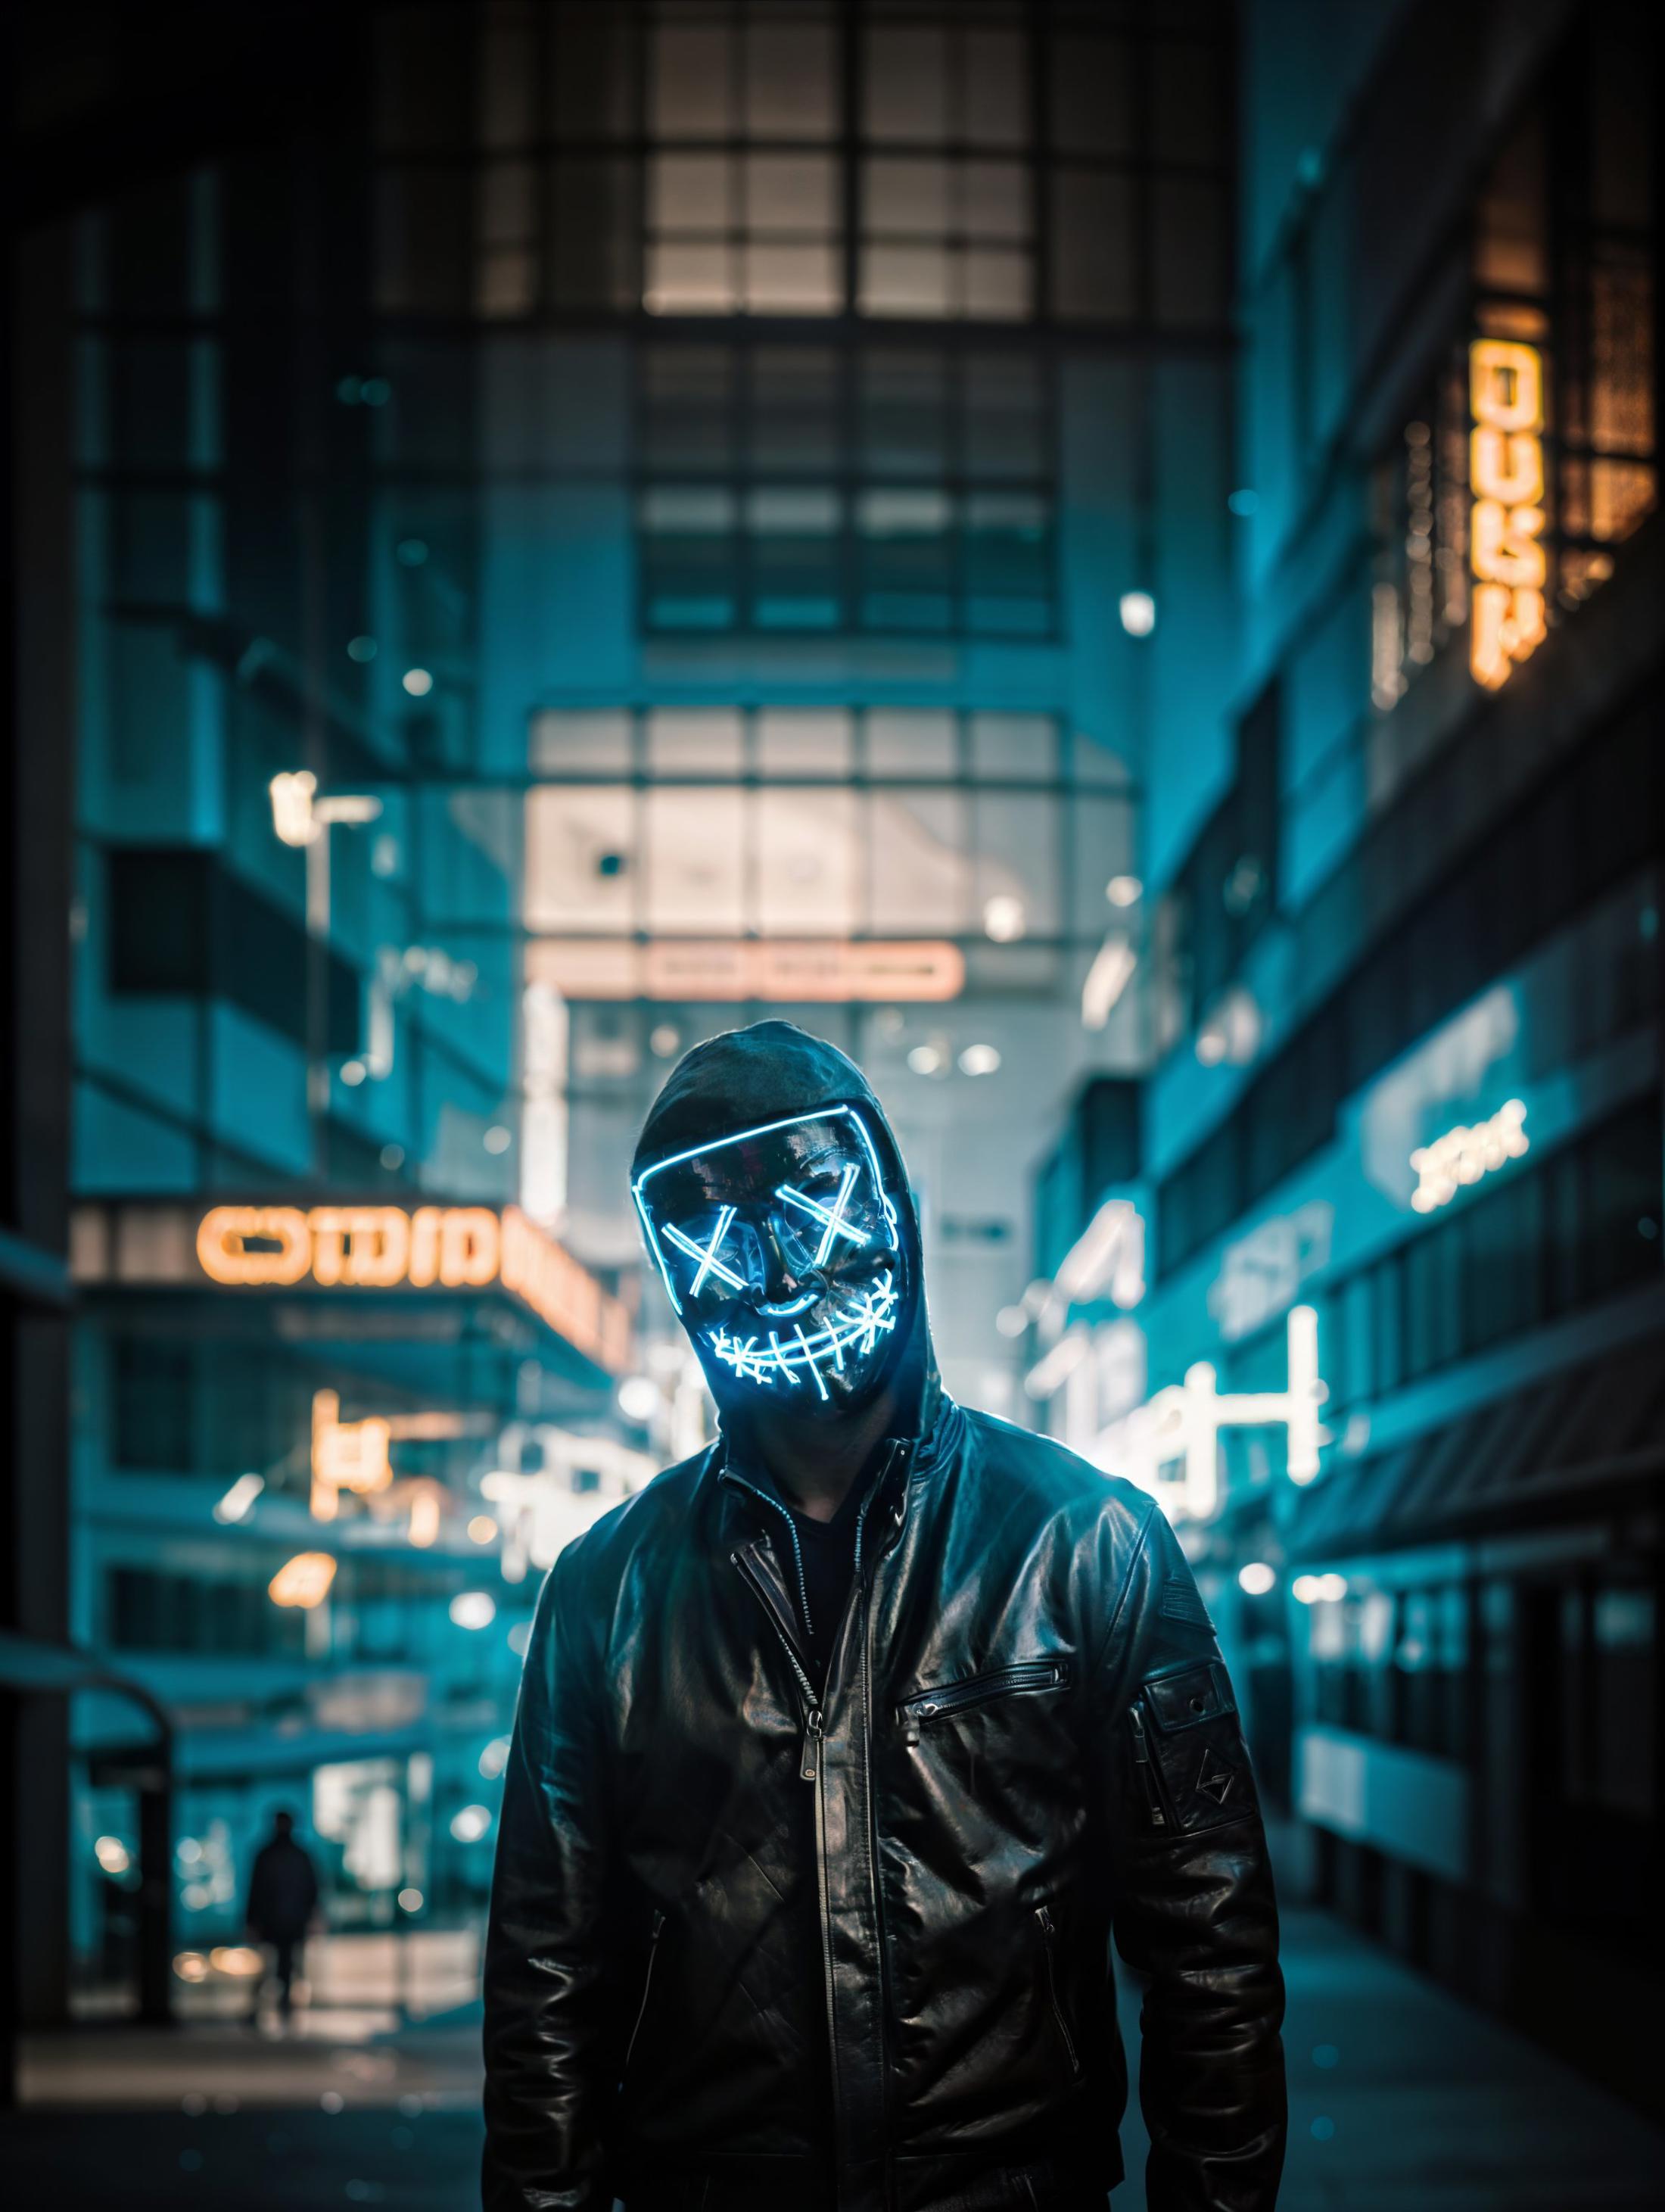 Neon Anonymous Mask | Judgment night mask image by ARTik_31